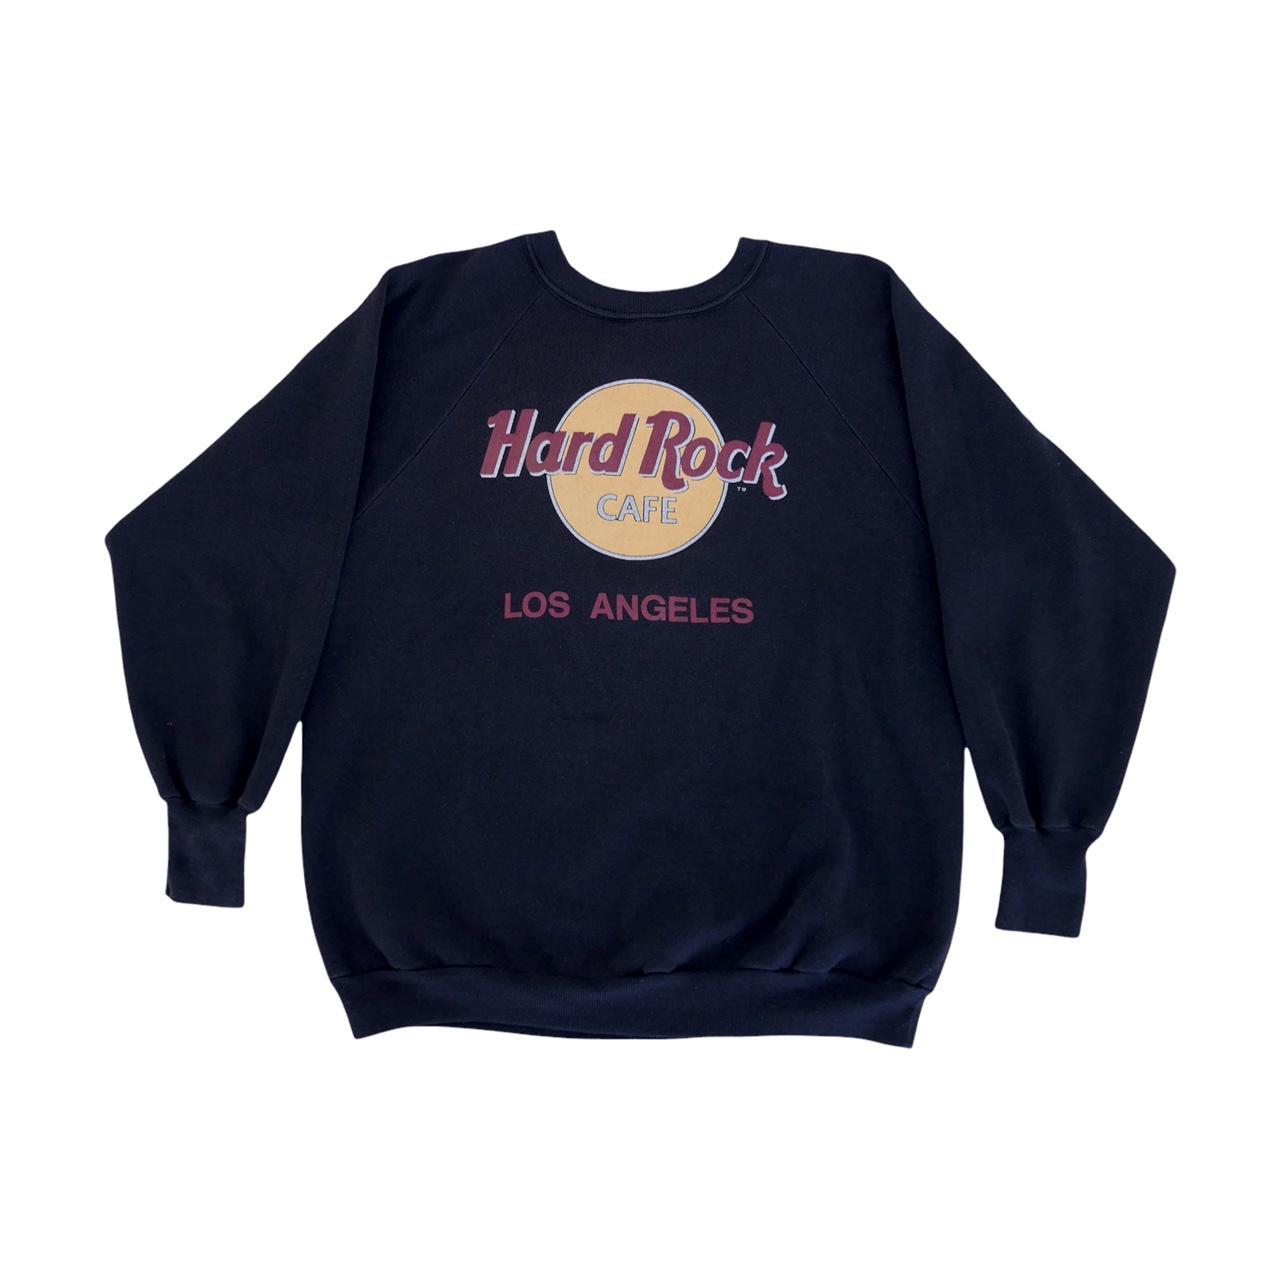 Hard Rock Cafe Los Angeles Crewneck Sweatshirt - Large